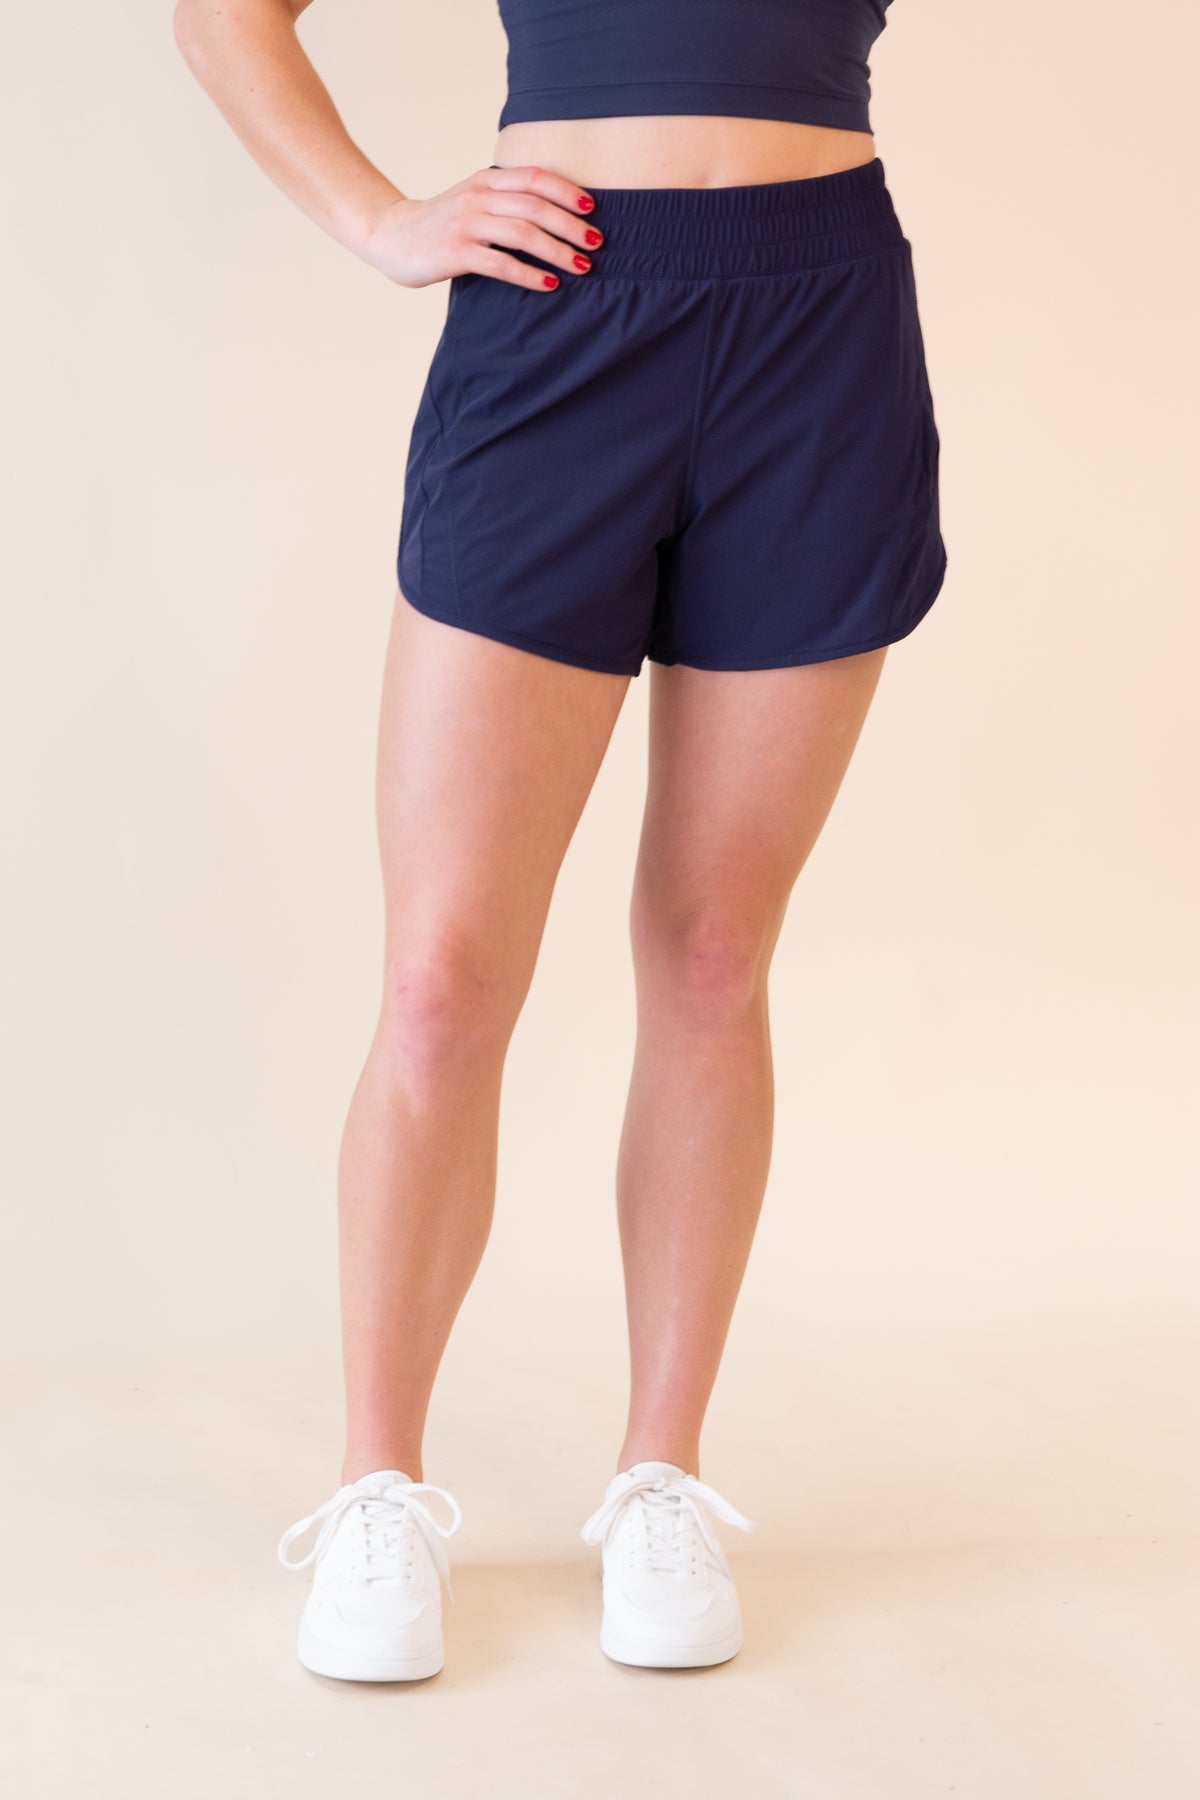 Miller Exercise Shorts